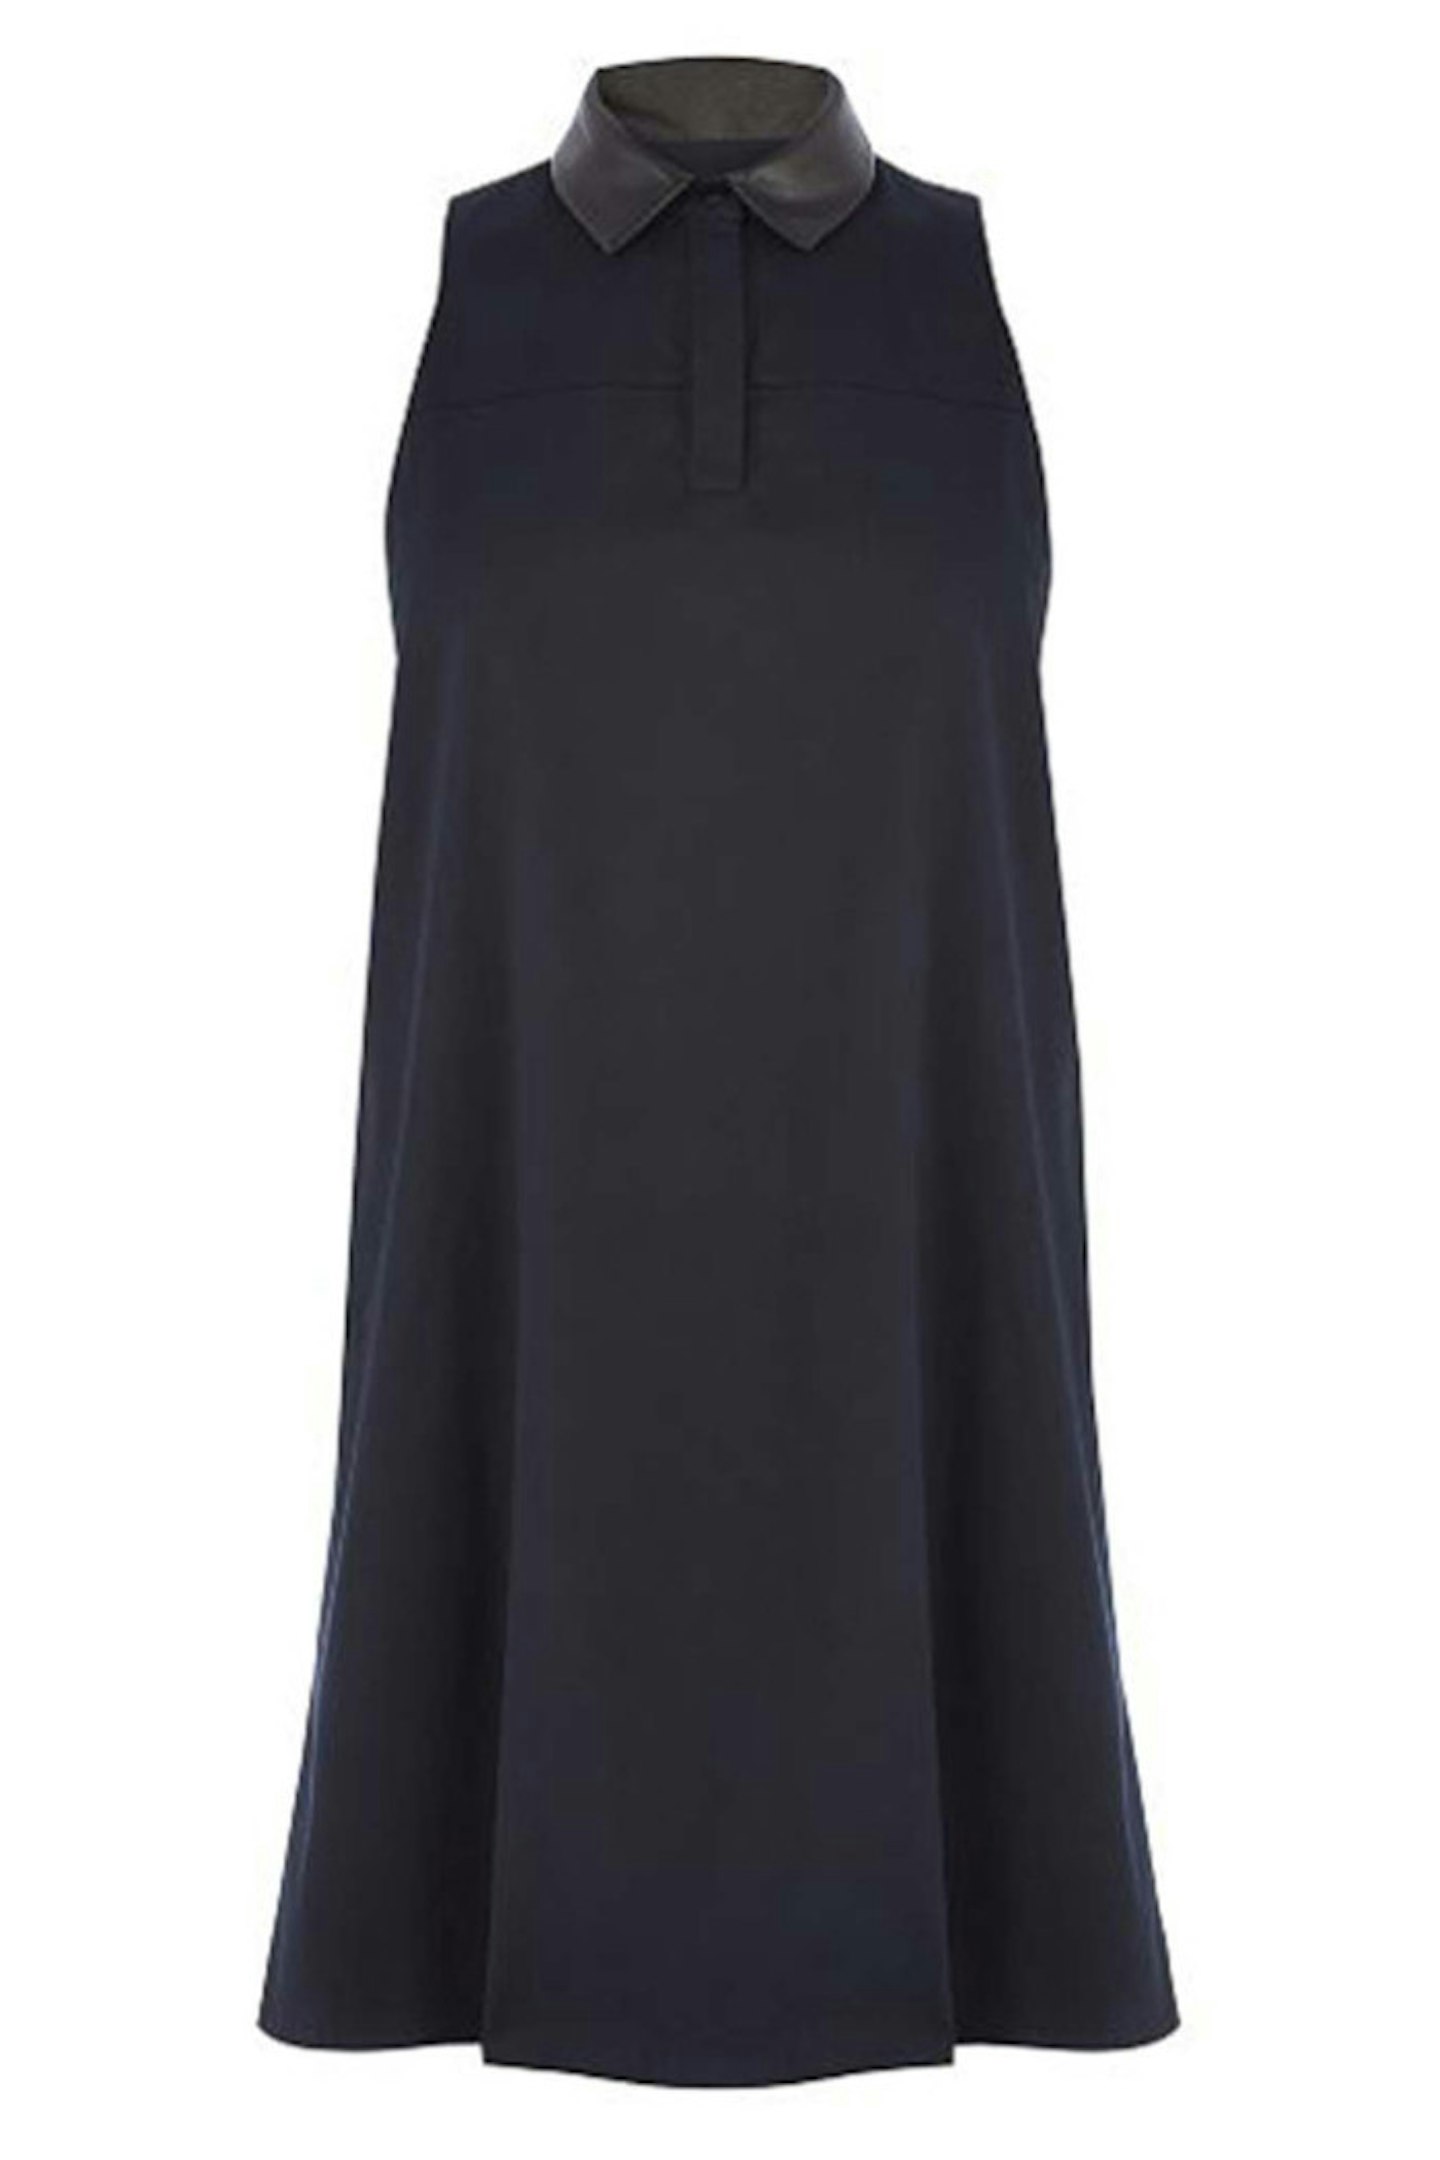 36. Blue Collared Dress, £45, Warehouse